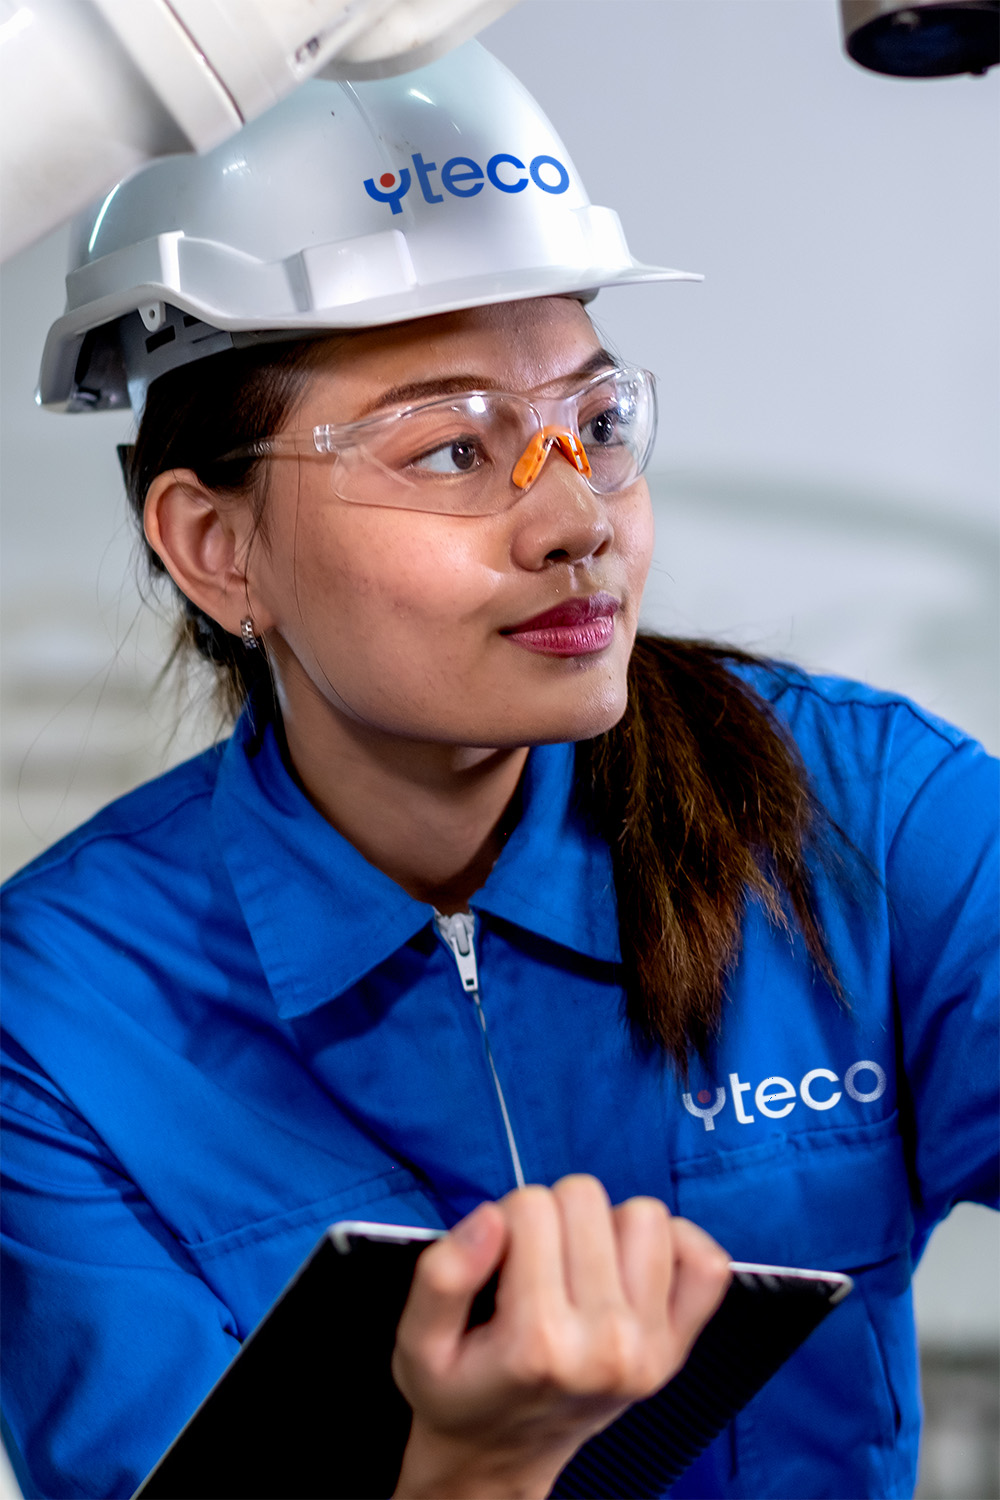 YTECO women wearing blue uniform design